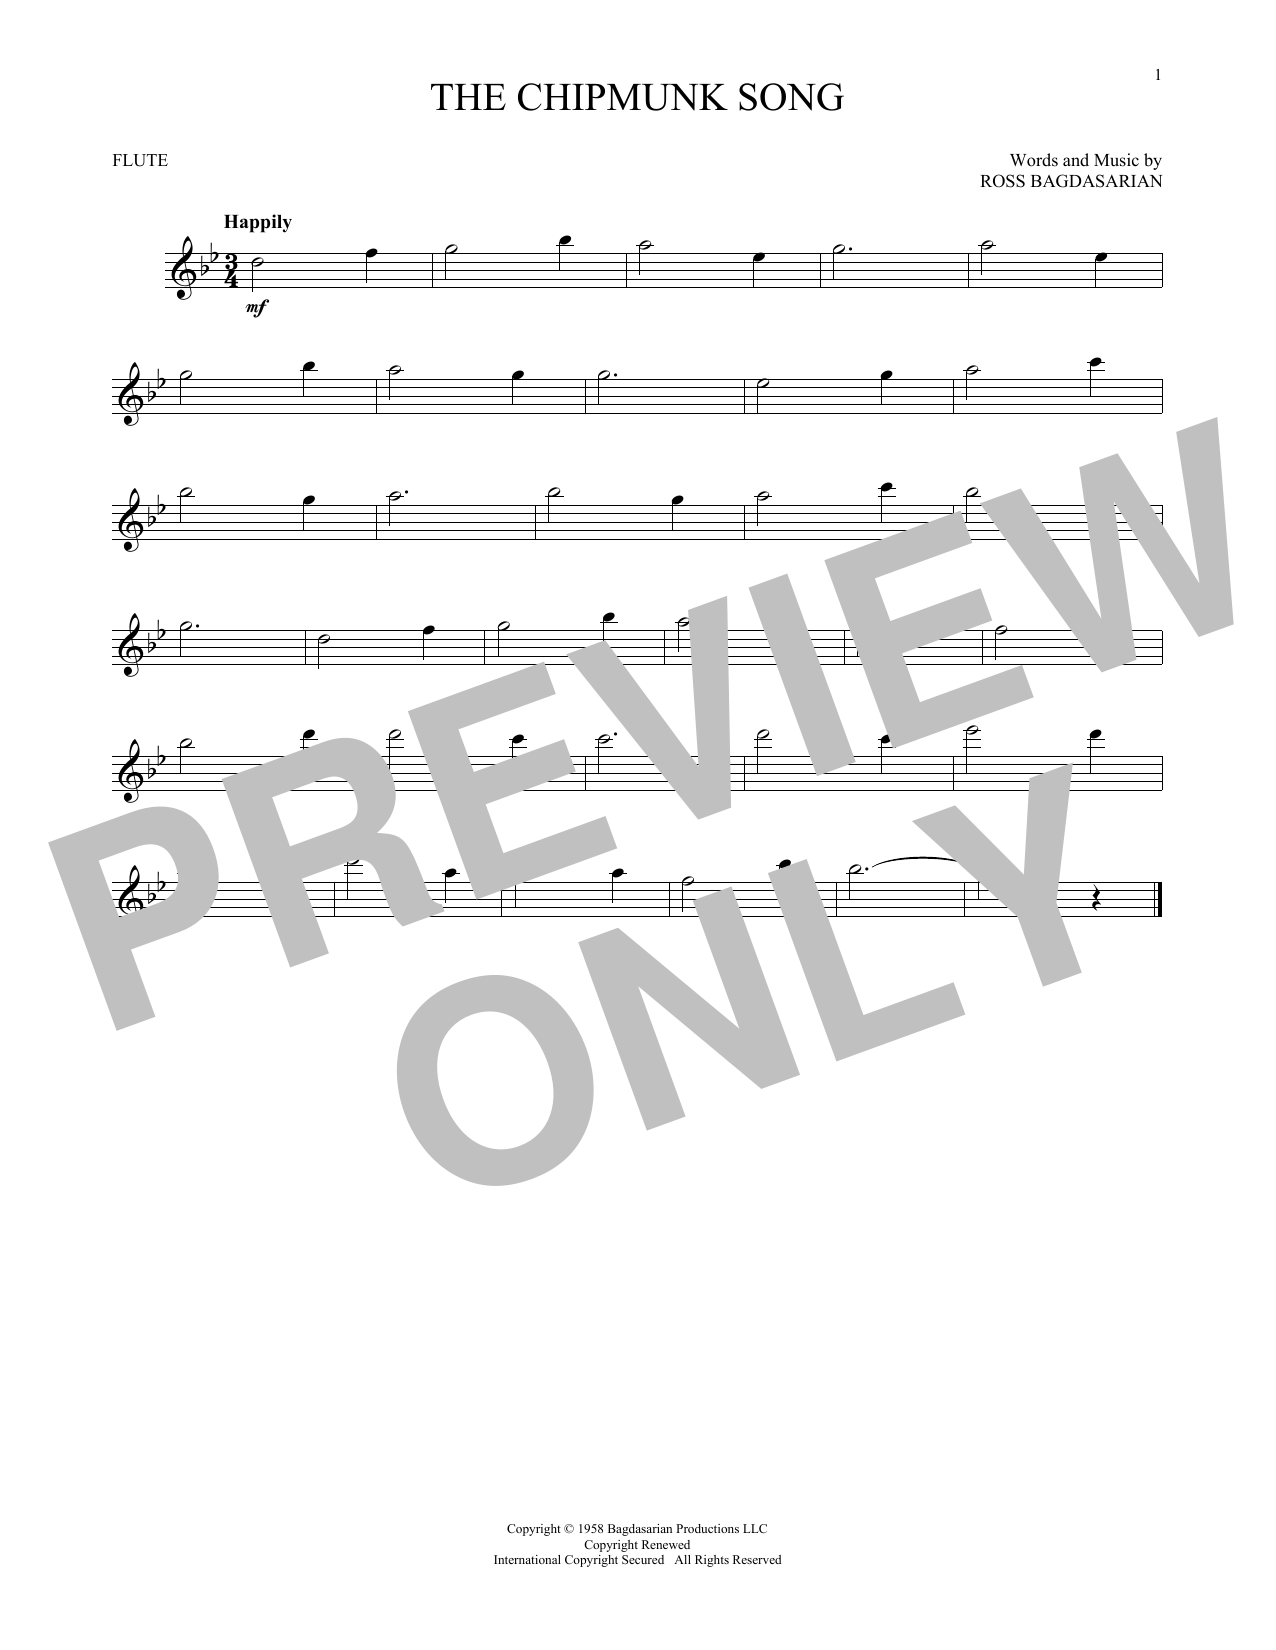 Ross Bagdasarian The Chipmunk Song Sheet Music Notes & Chords for Banjo - Download or Print PDF